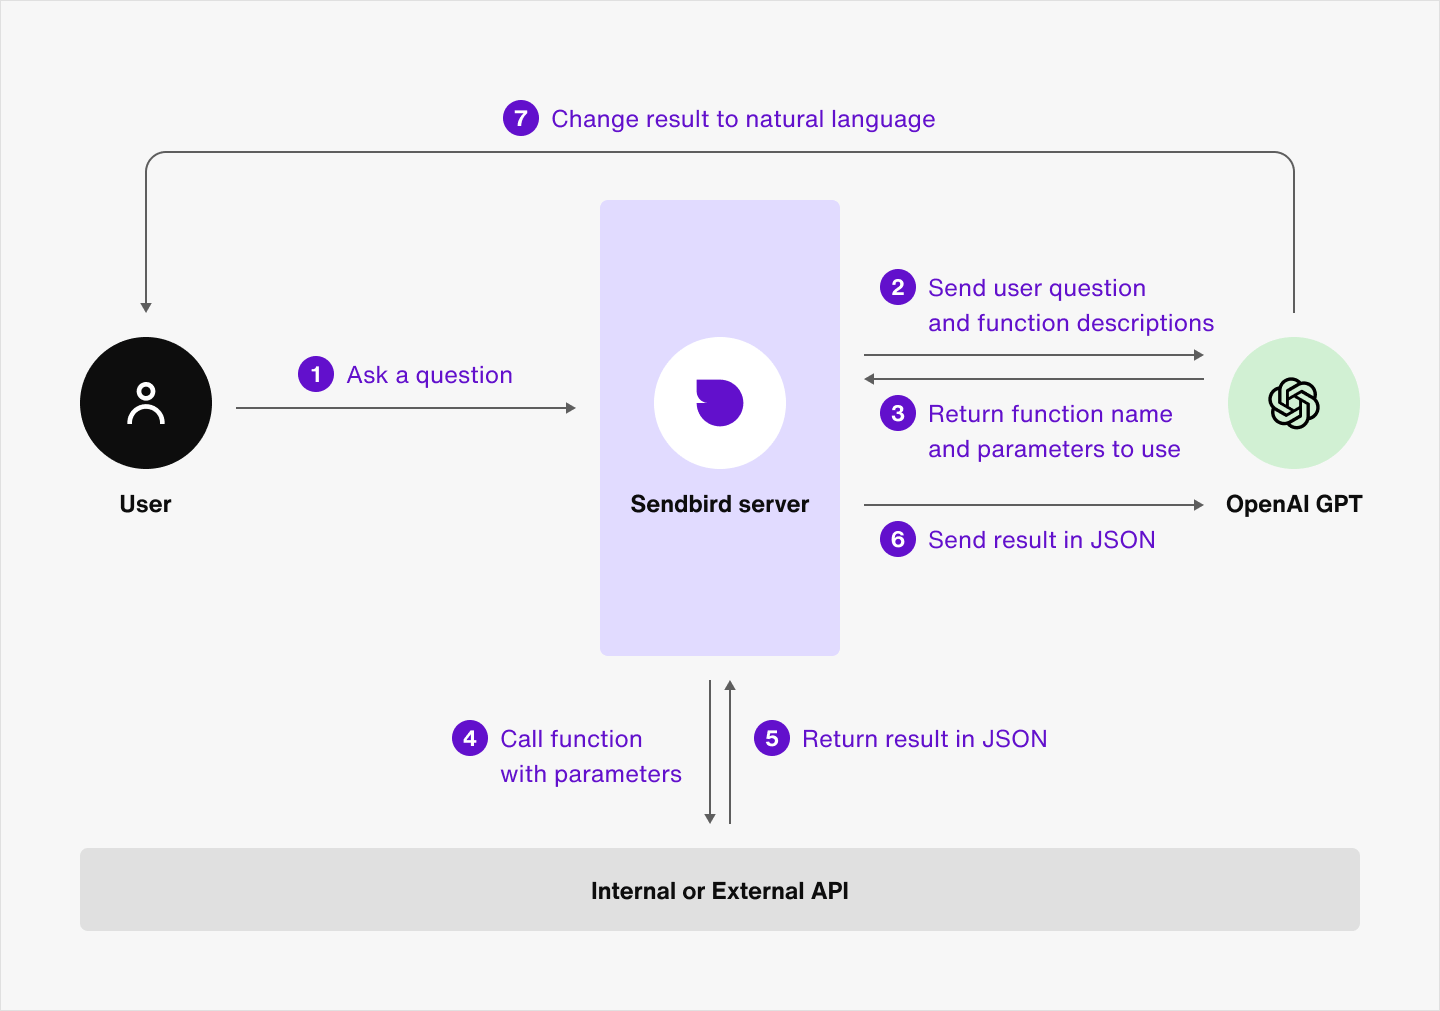 Image|A diagram showing the relationship between user, Sendbird server, OpenAI engine, and internal and external APIs.